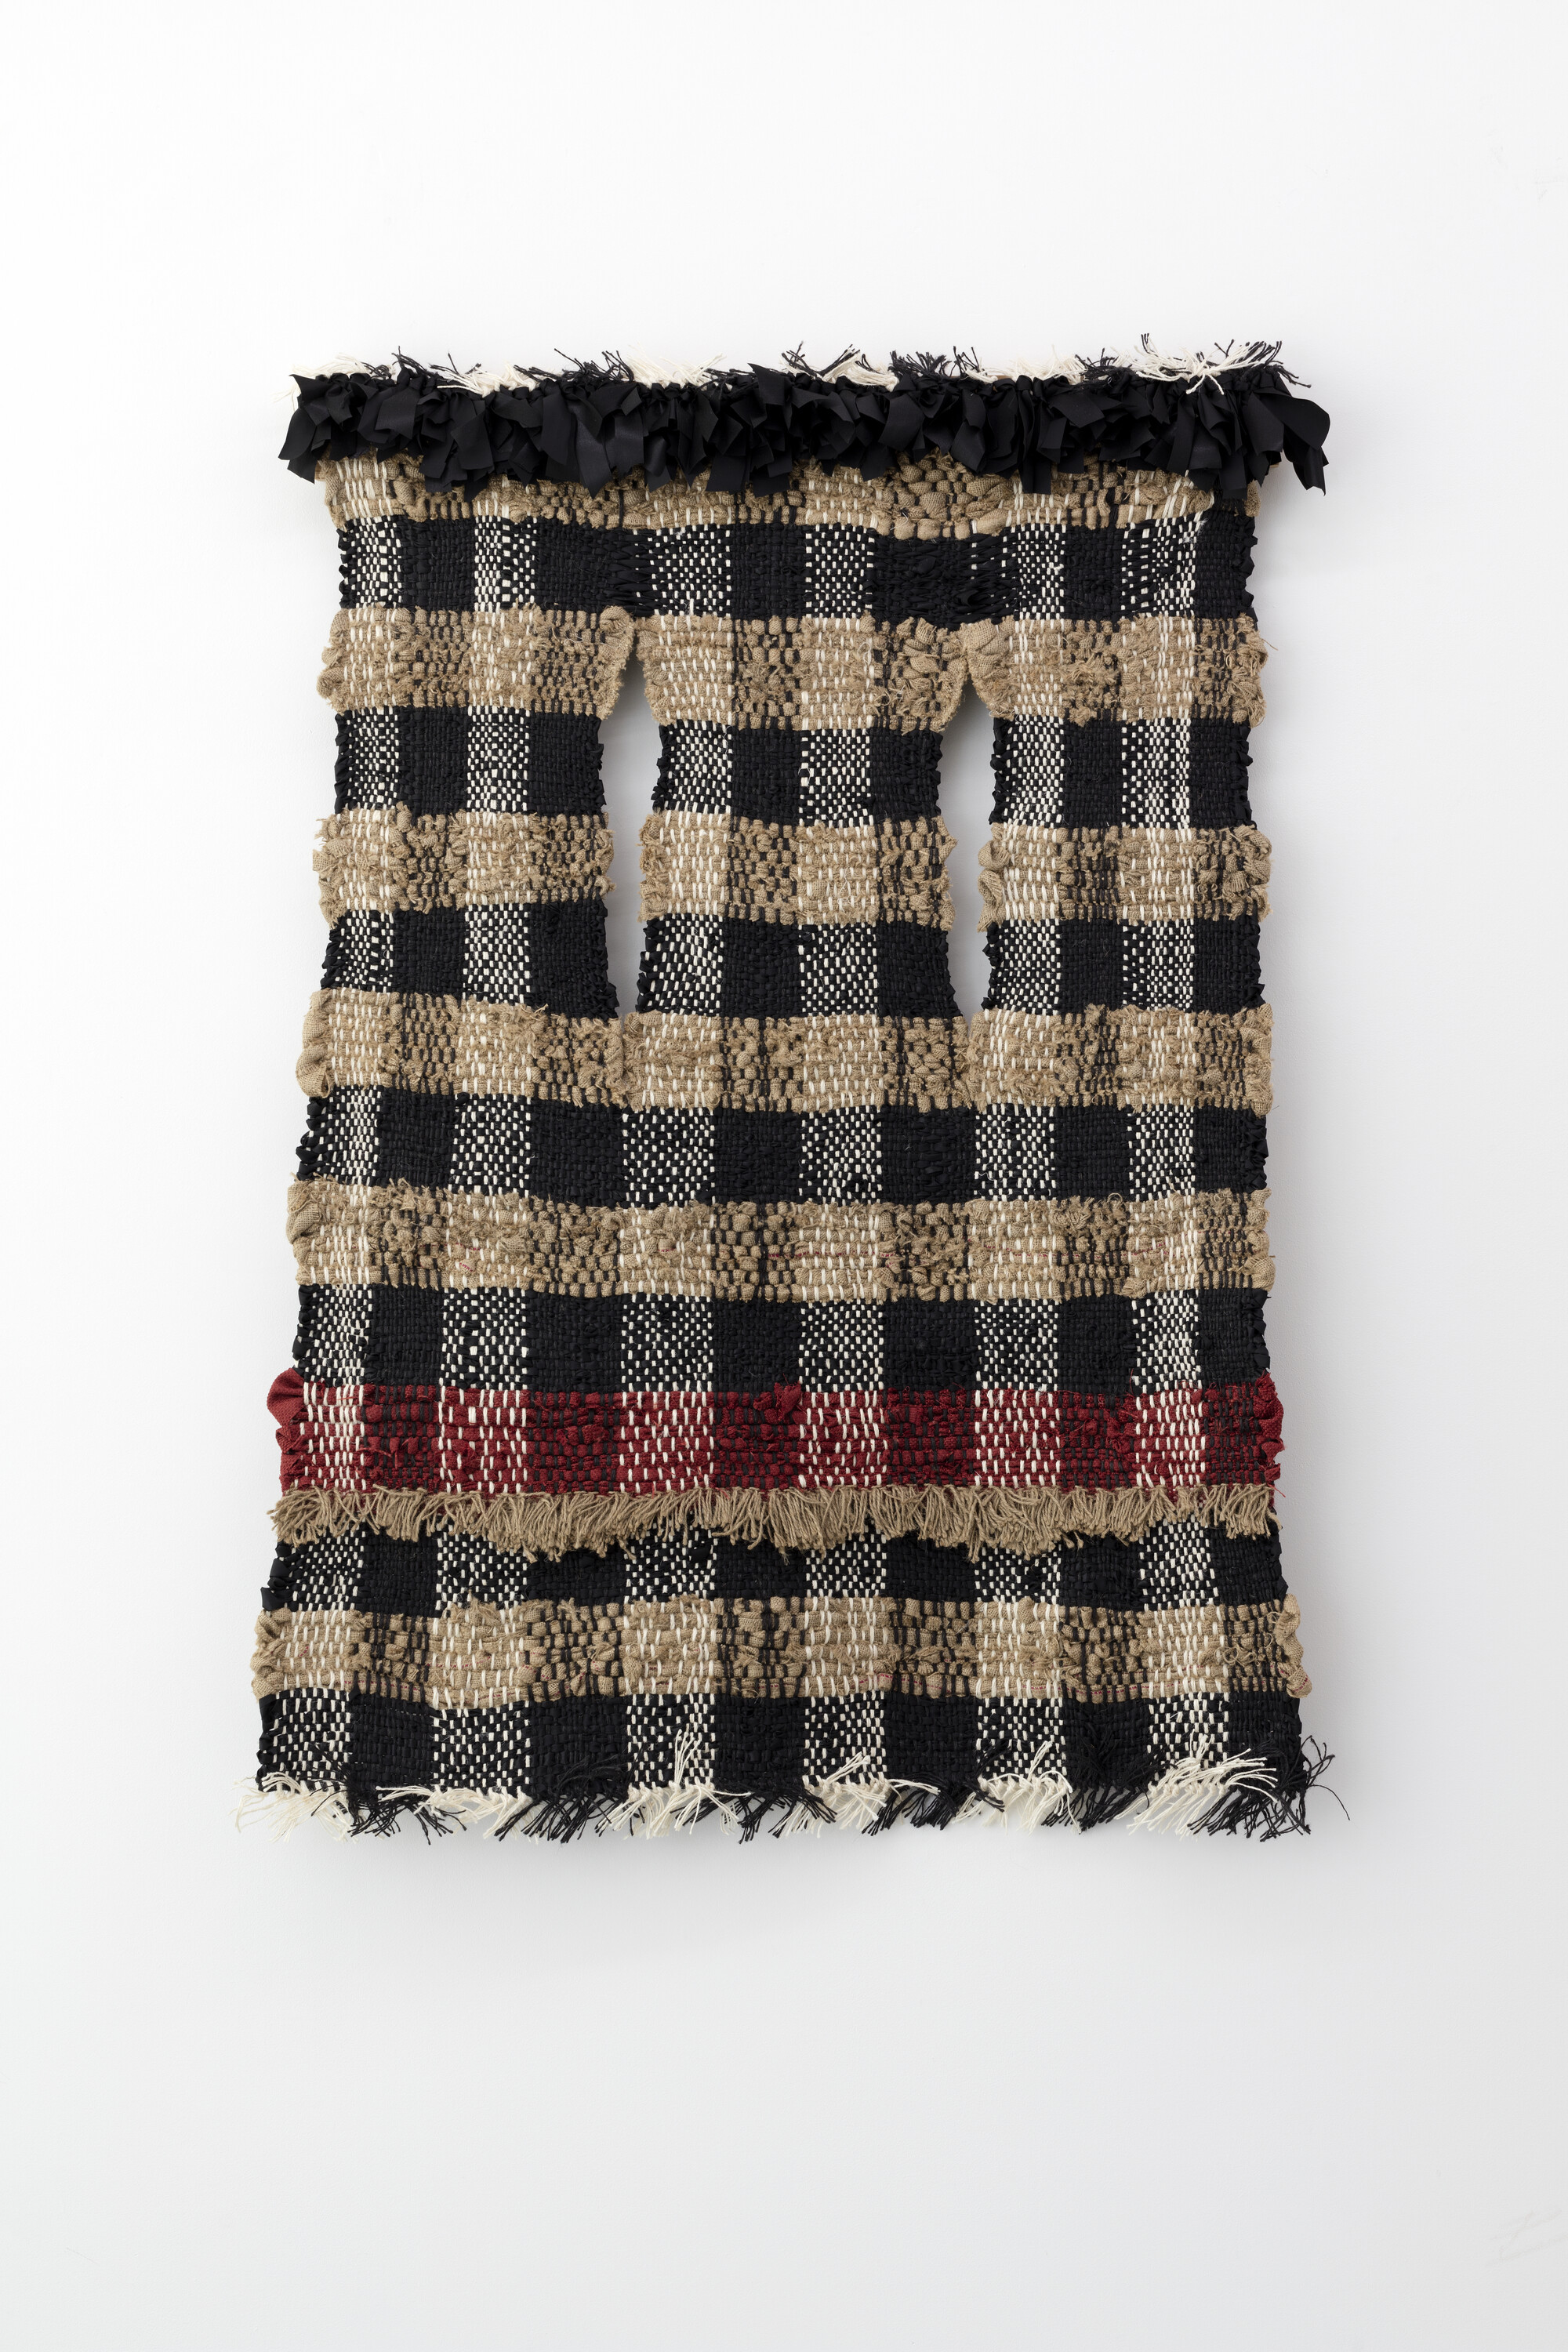 Elizabeth Pulie, <em>#96 (Bauhaus Weaving Two)</em>, 2019, mixed fibre, 140 x 90cm. Courtesy Sarah Cottier Gallery